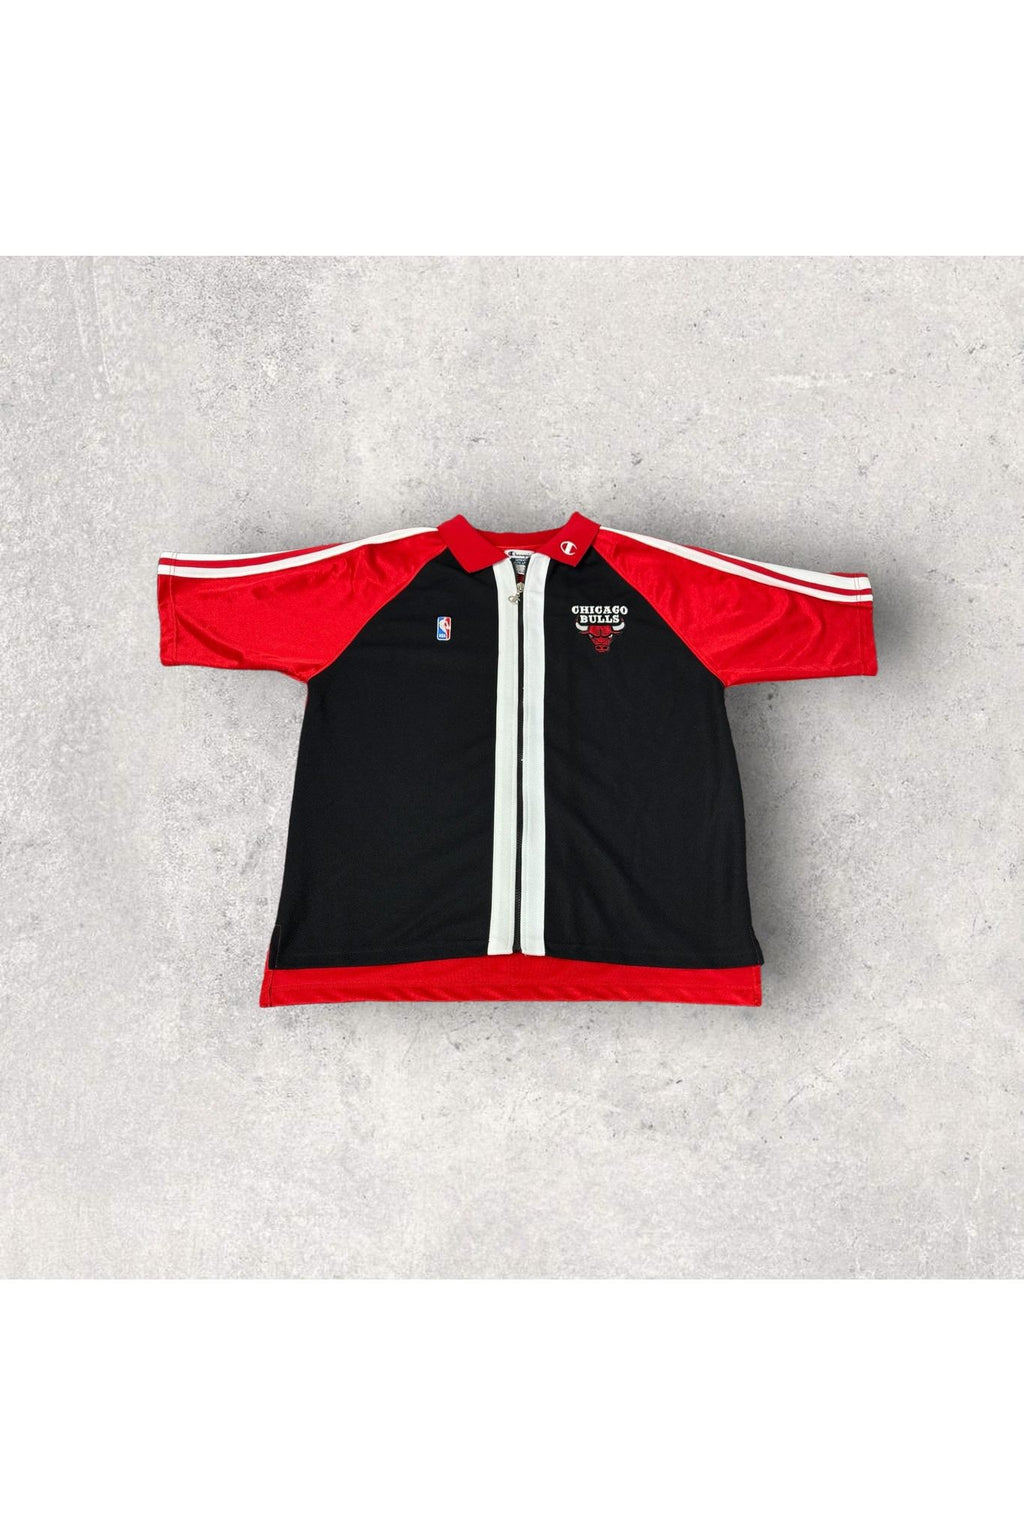 Vintage Champion Chicago Bulls Collared Zip Up Shirt- L